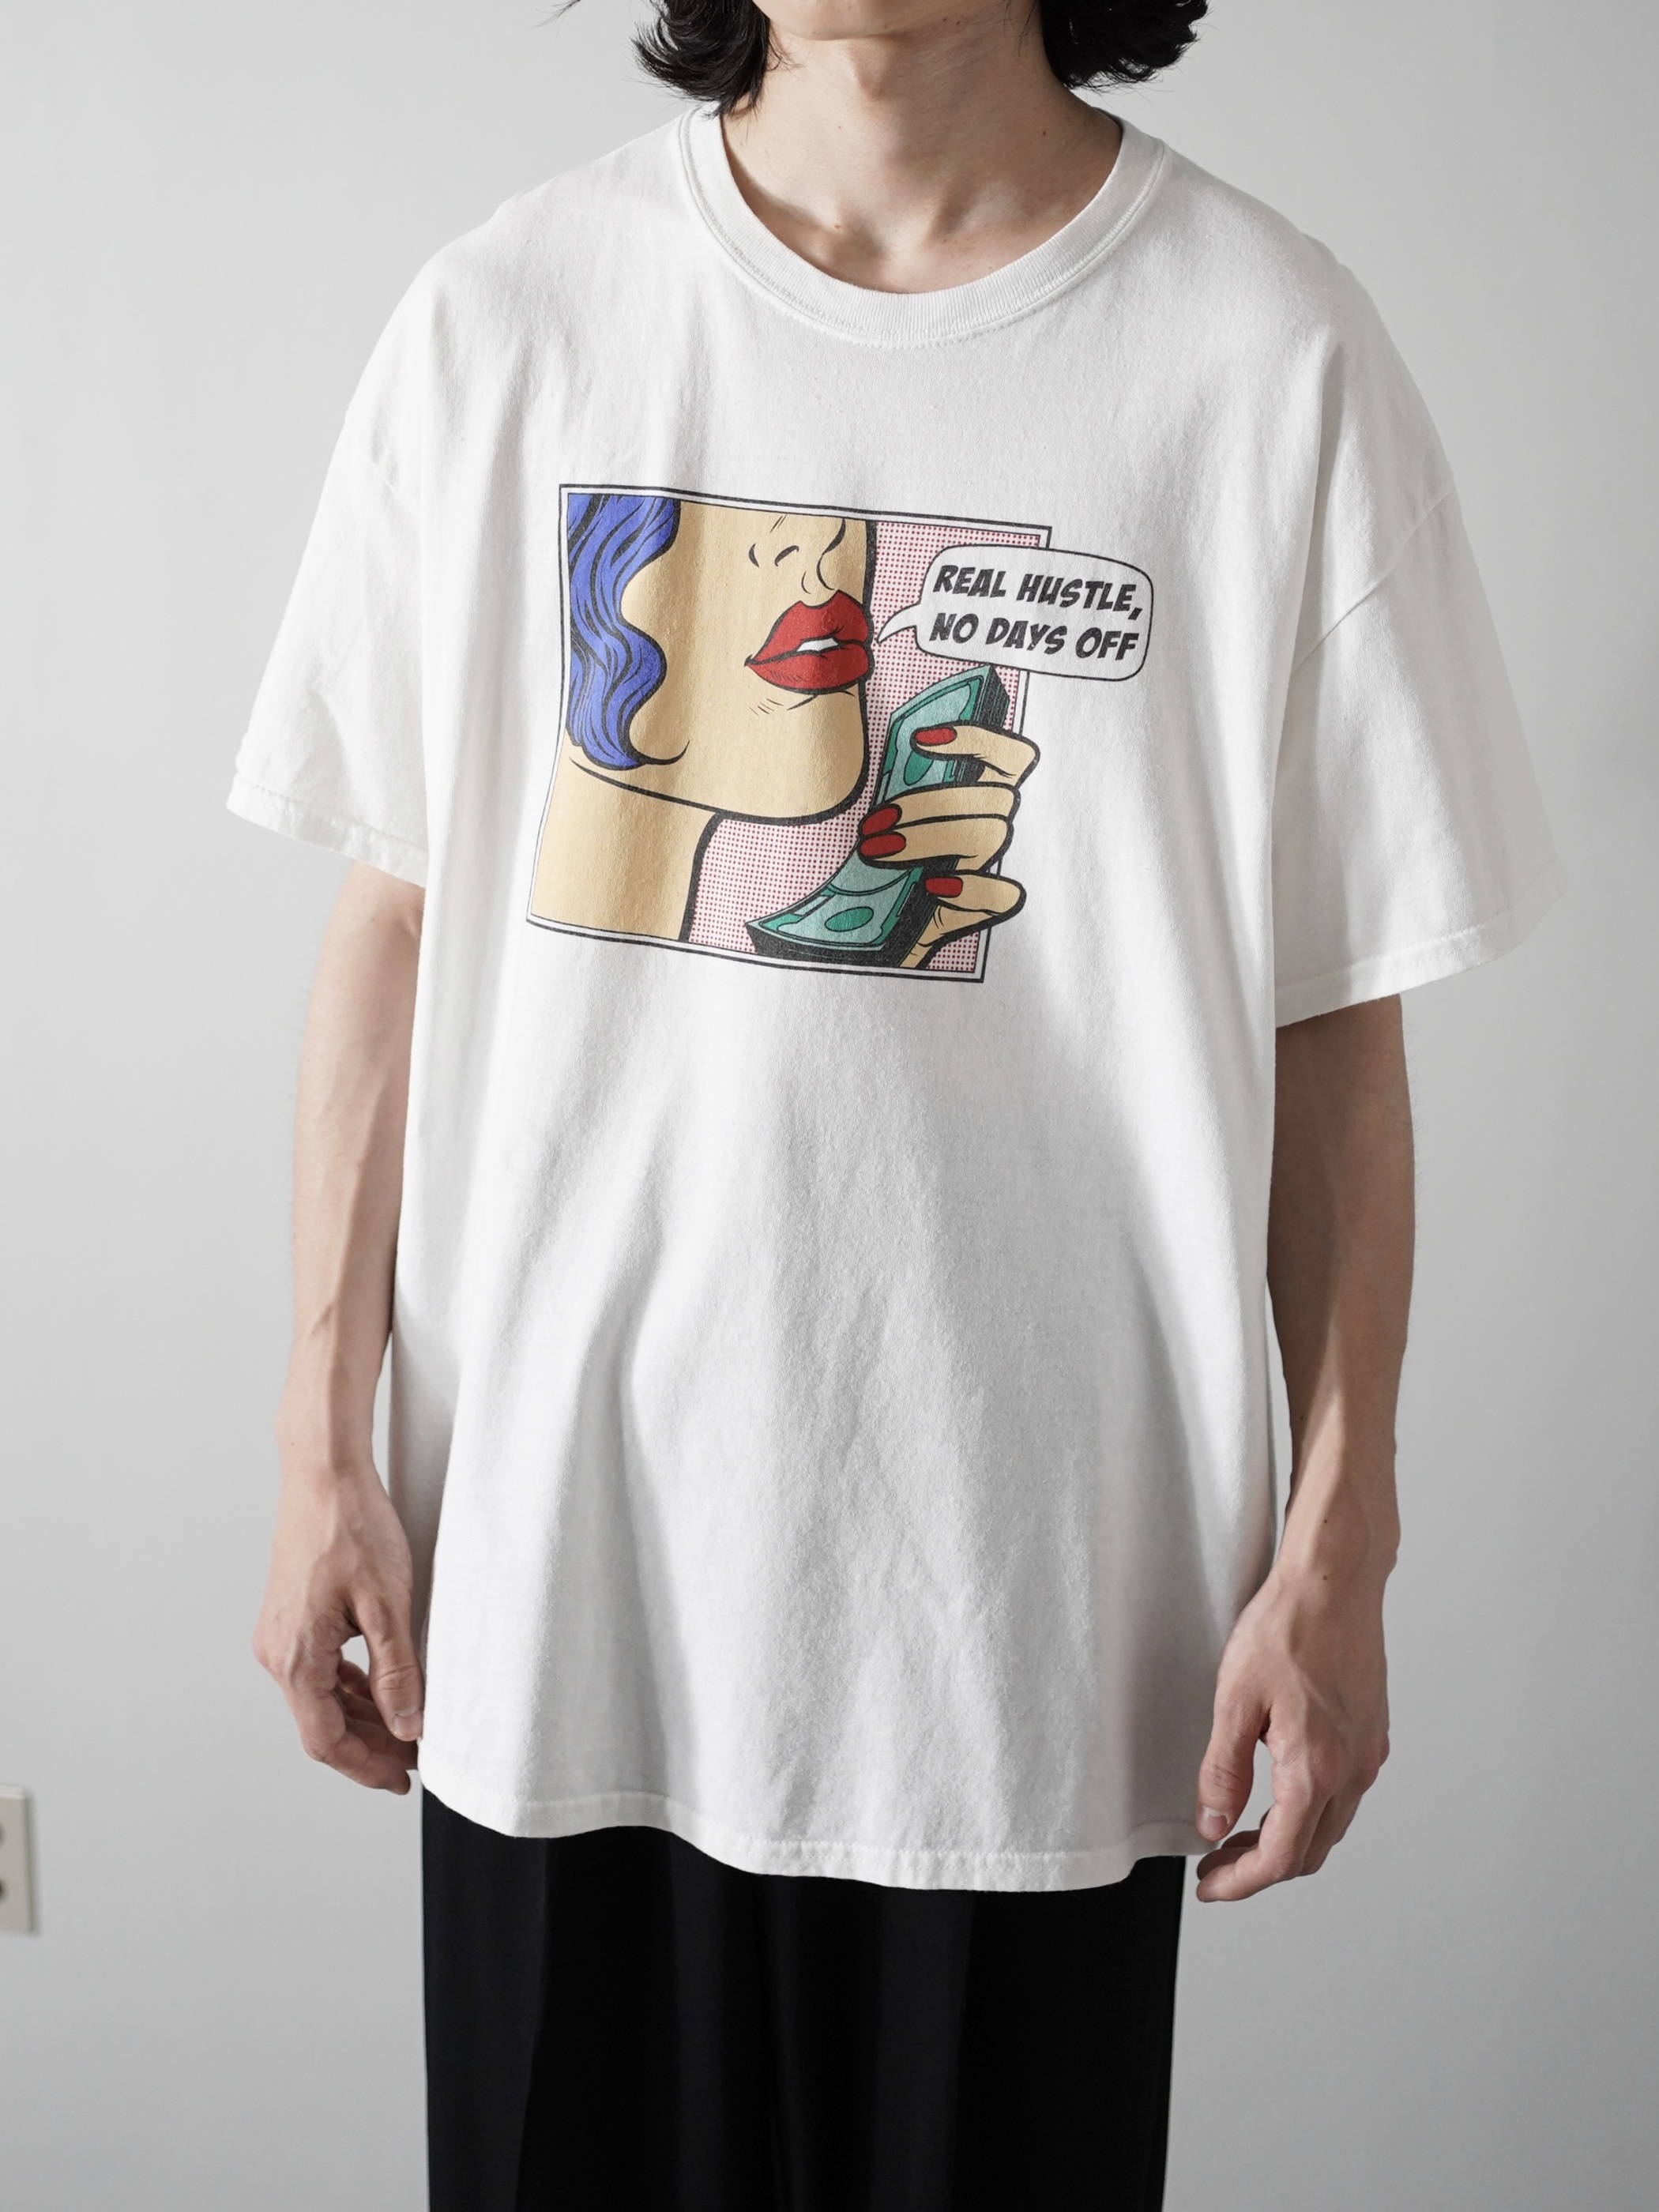 00's Print T-shirts